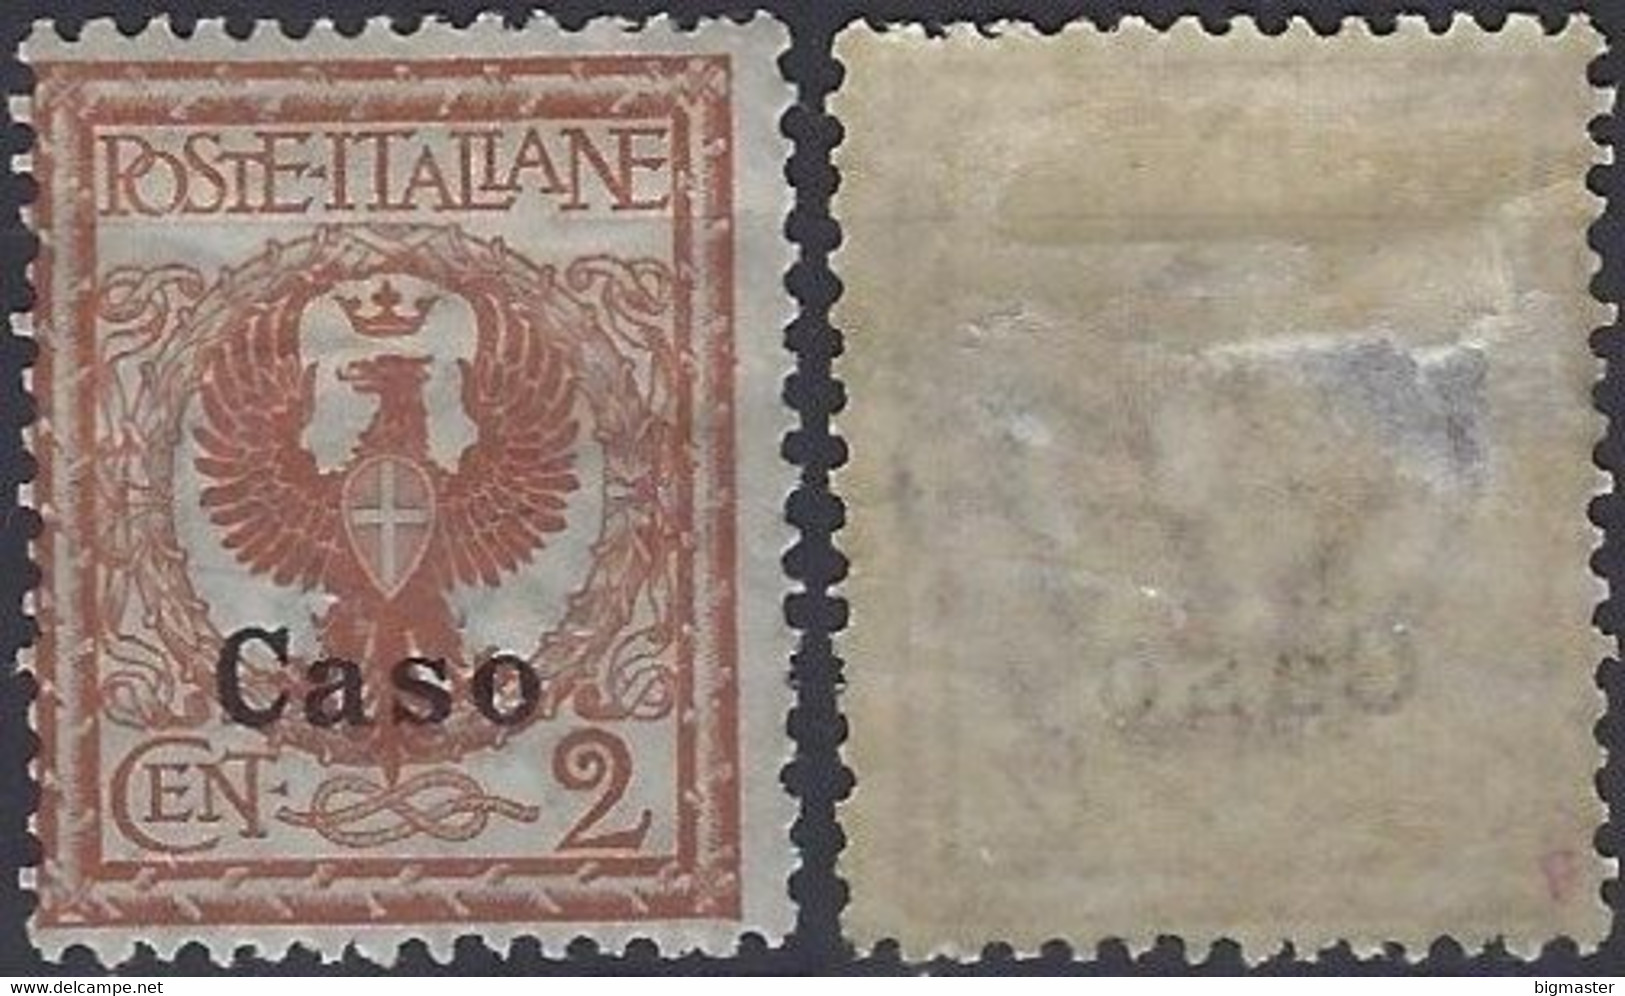 1912 Regno D'Italia IG 1912 IT-EG CS1 2c Italy Stamps Overprinted 'Caso' - Egée (Caso)